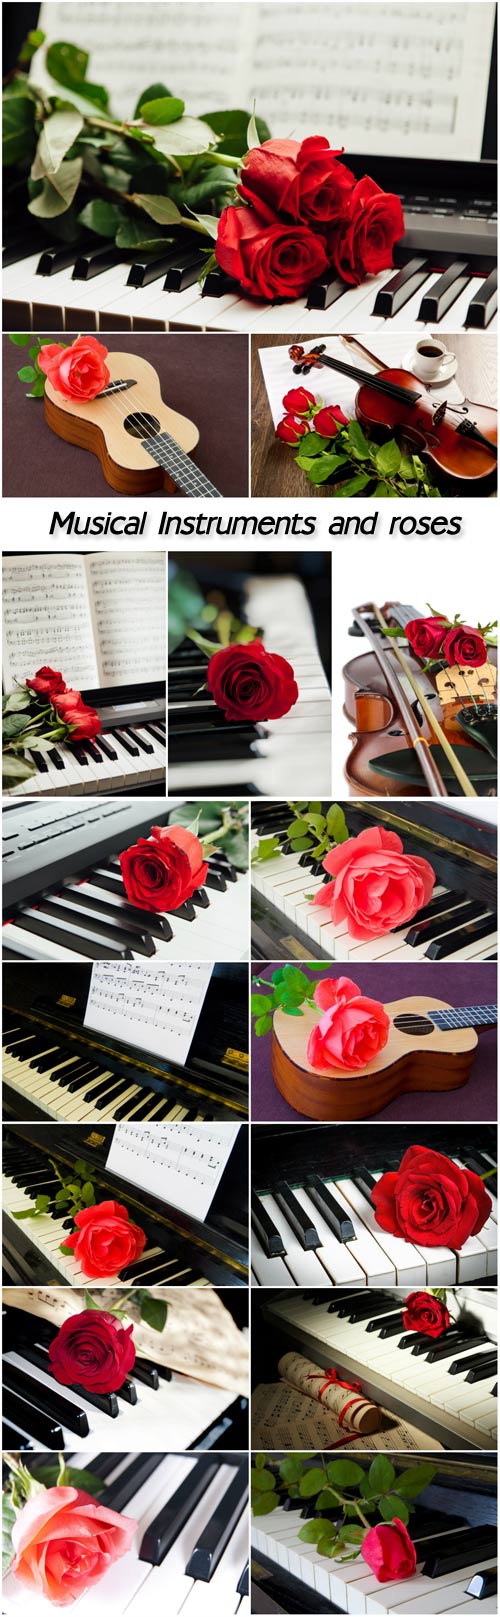 Musical instruments and roses, guitar, violin, piano